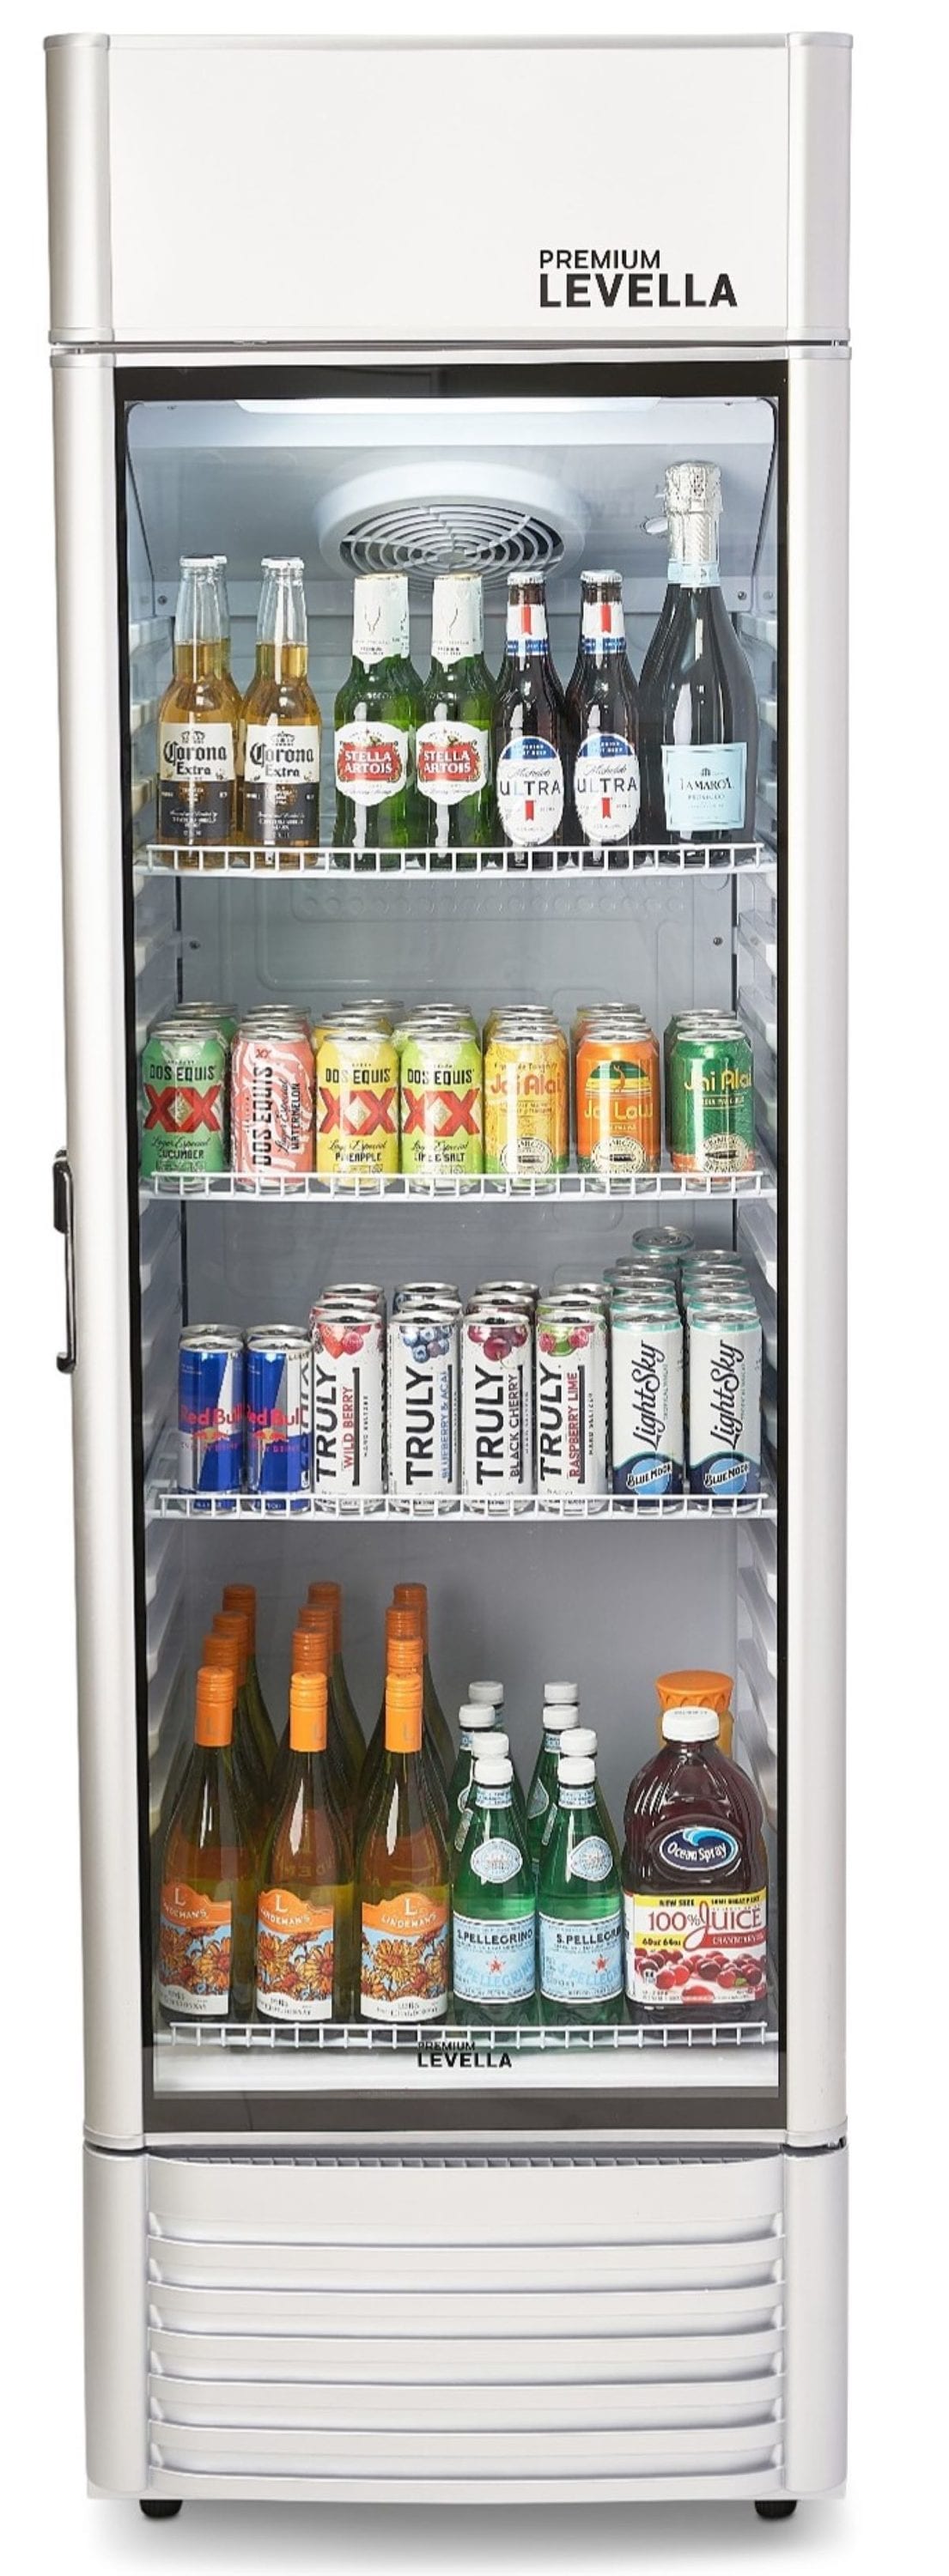 Opti Chill  2 Gallon Refrigerator Unit + 1 Filter (Retail $125